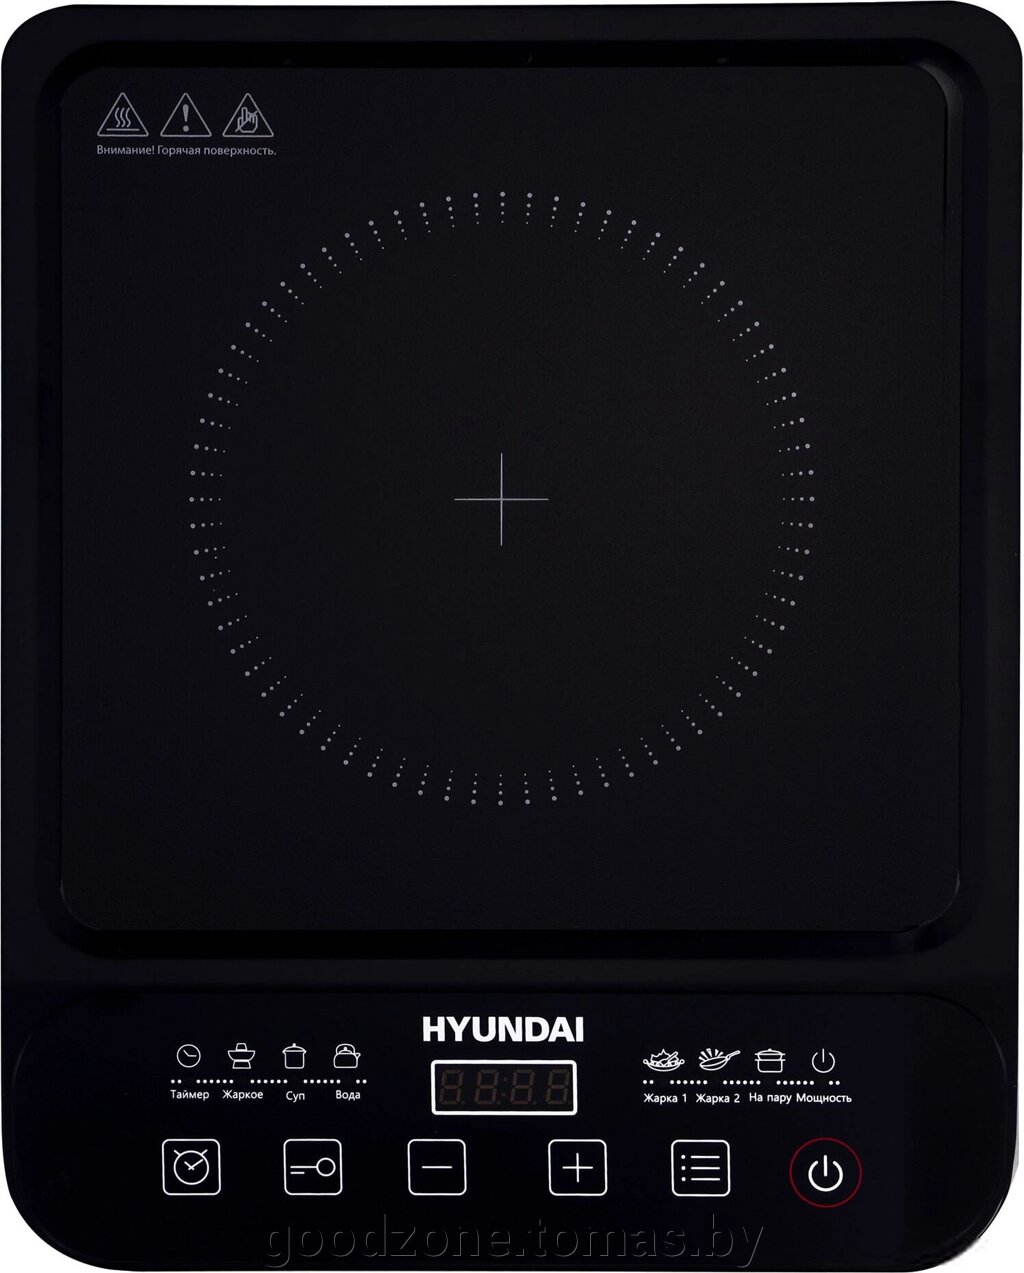 Настольная плита Hyundai HYC-0106 от компании Интернет-магазин «Goodzone. by» - фото 1